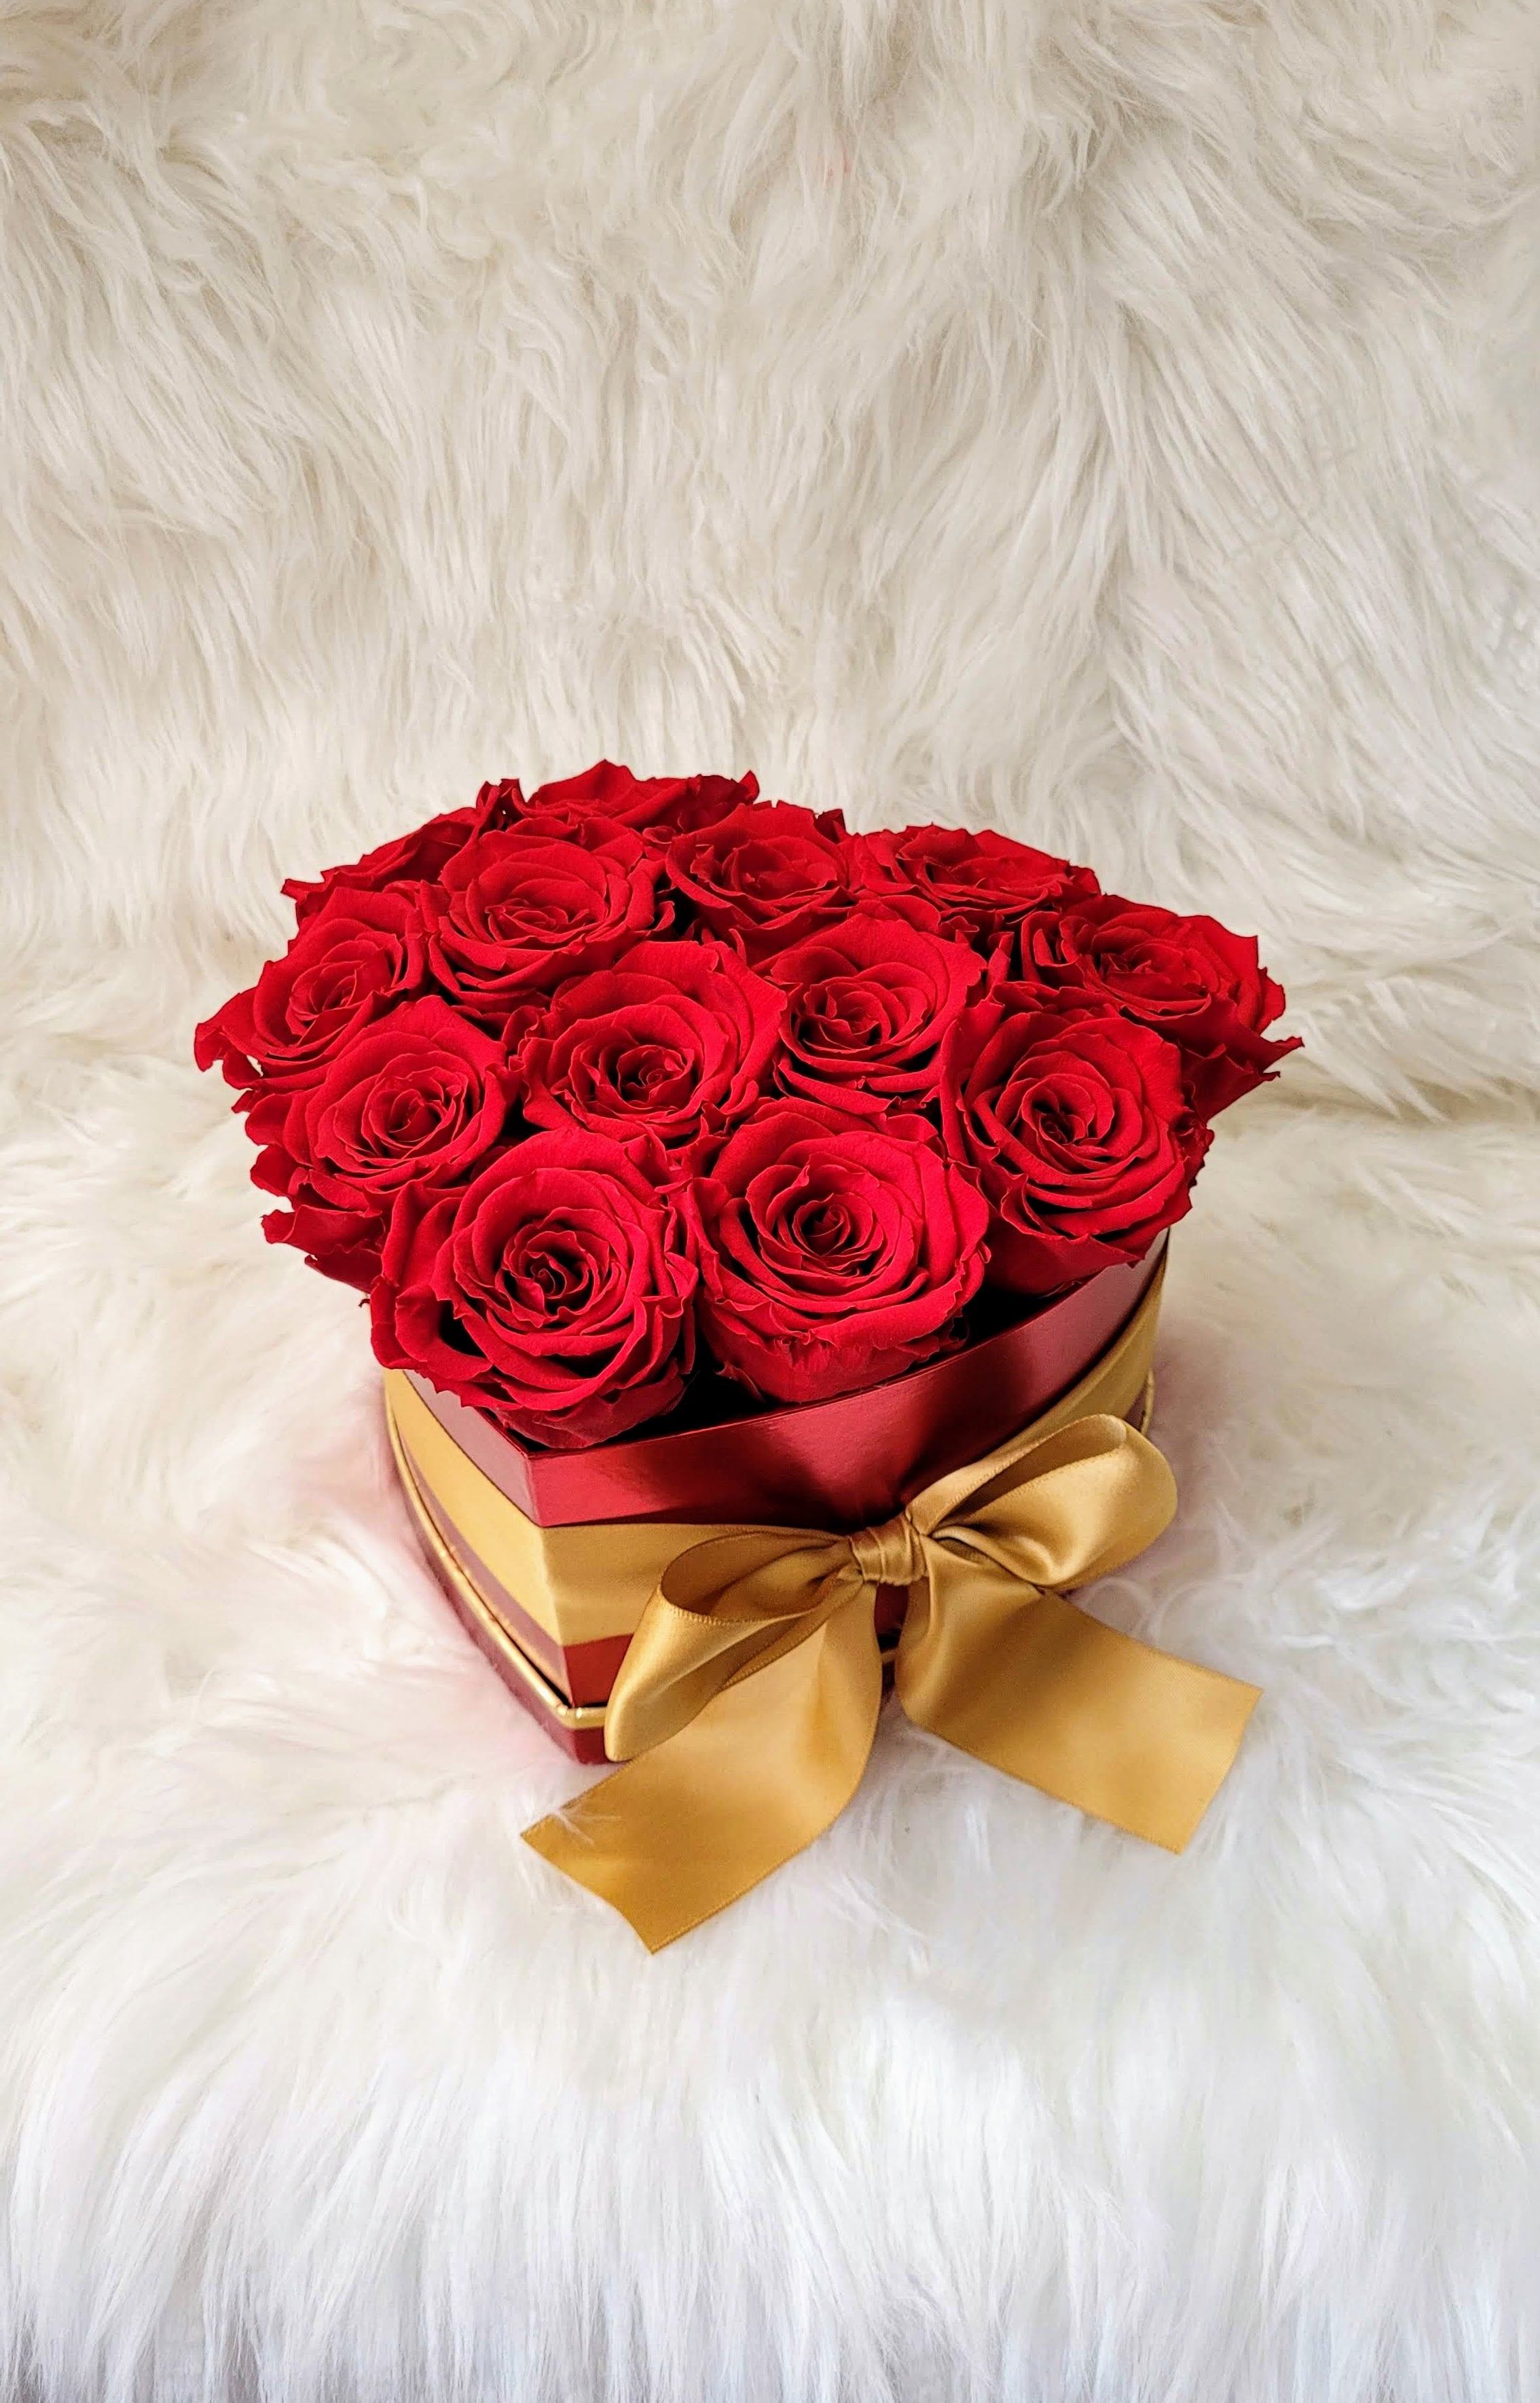 Heart Shaped Rose Gift Box – Amorora